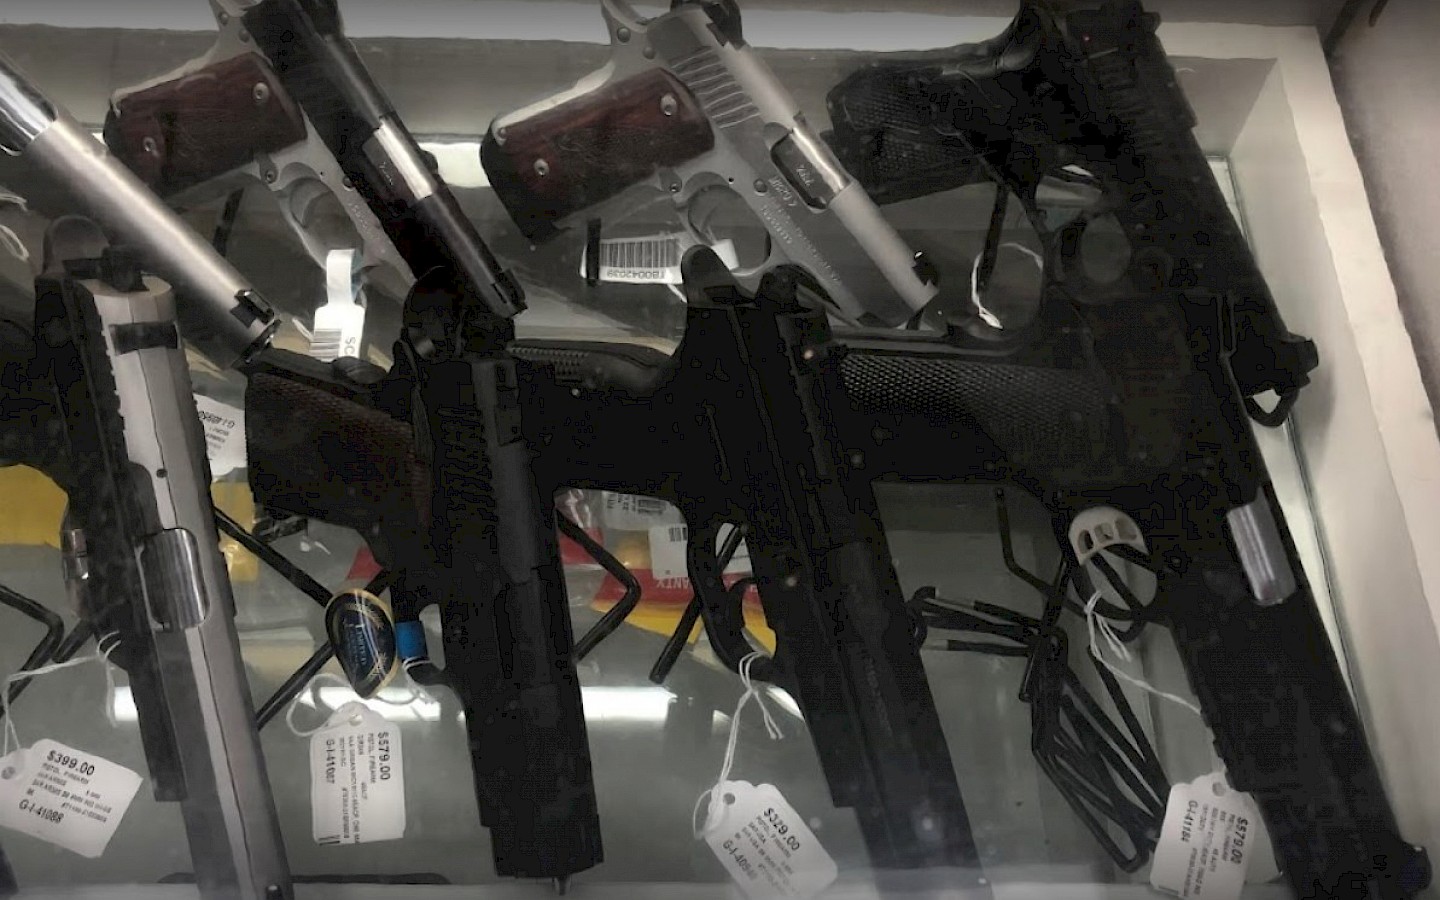 various handguns on display